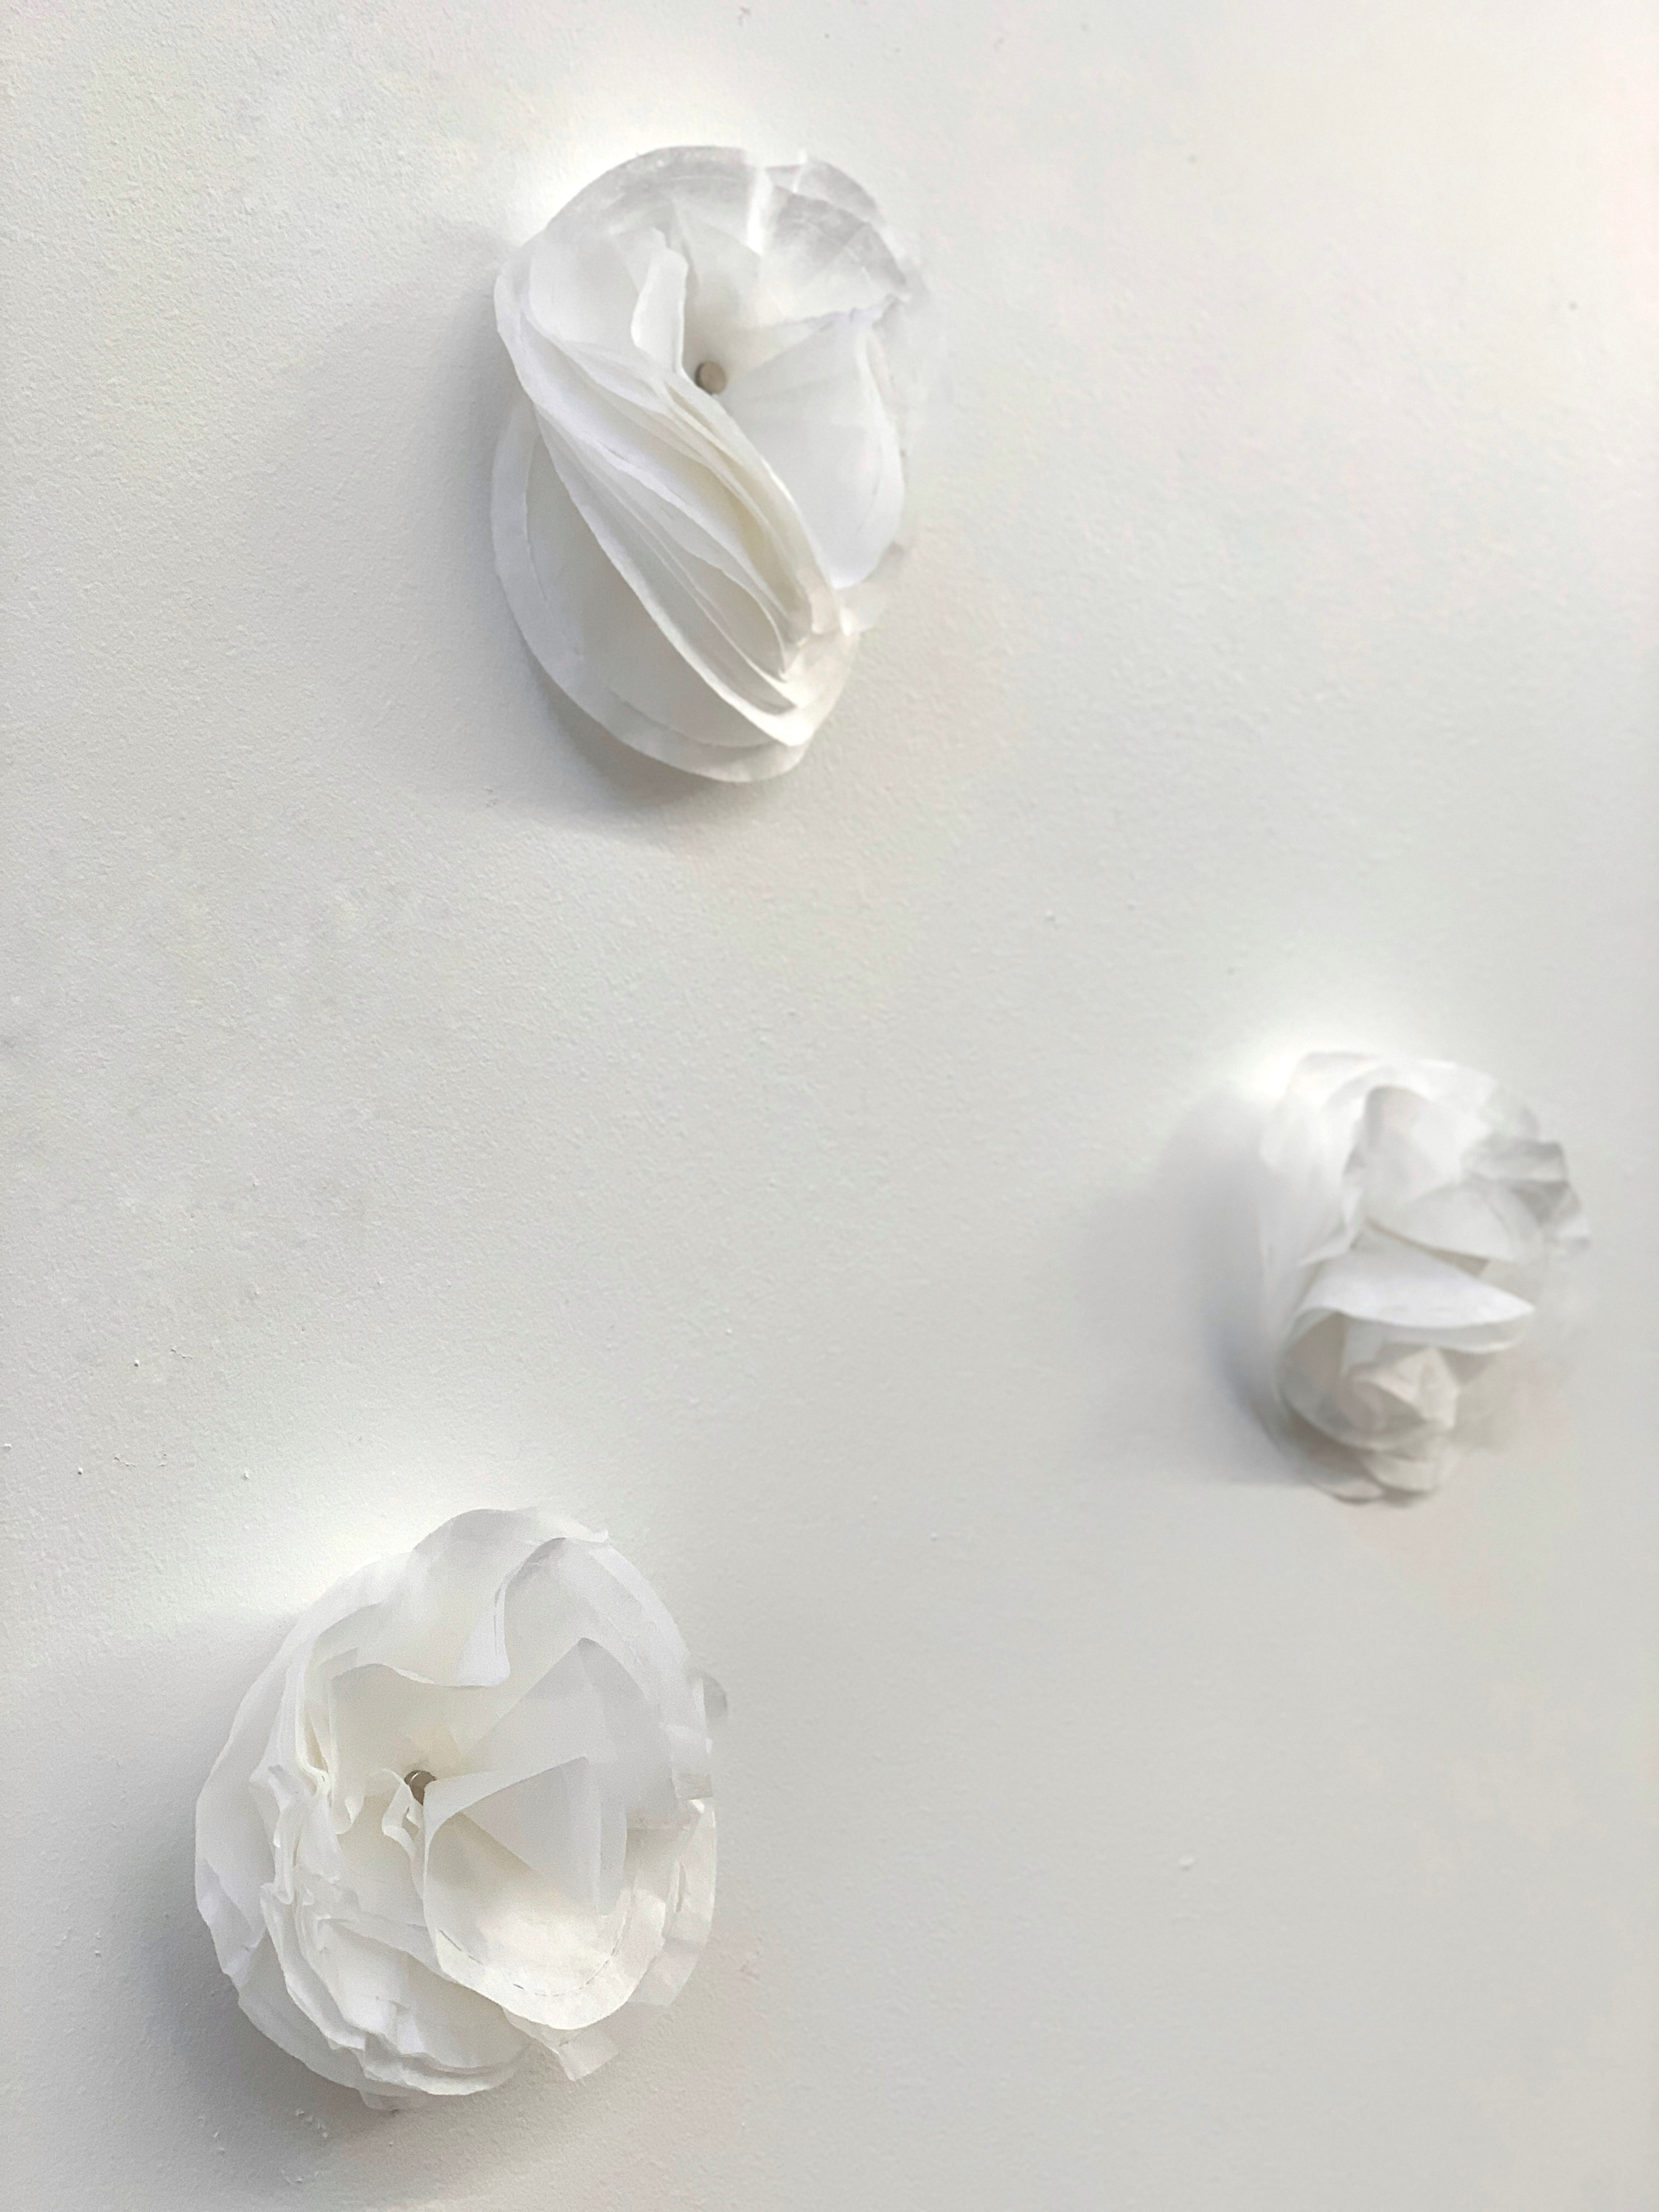 Kate wilson blossoms sculpture2.jpg nhxgan